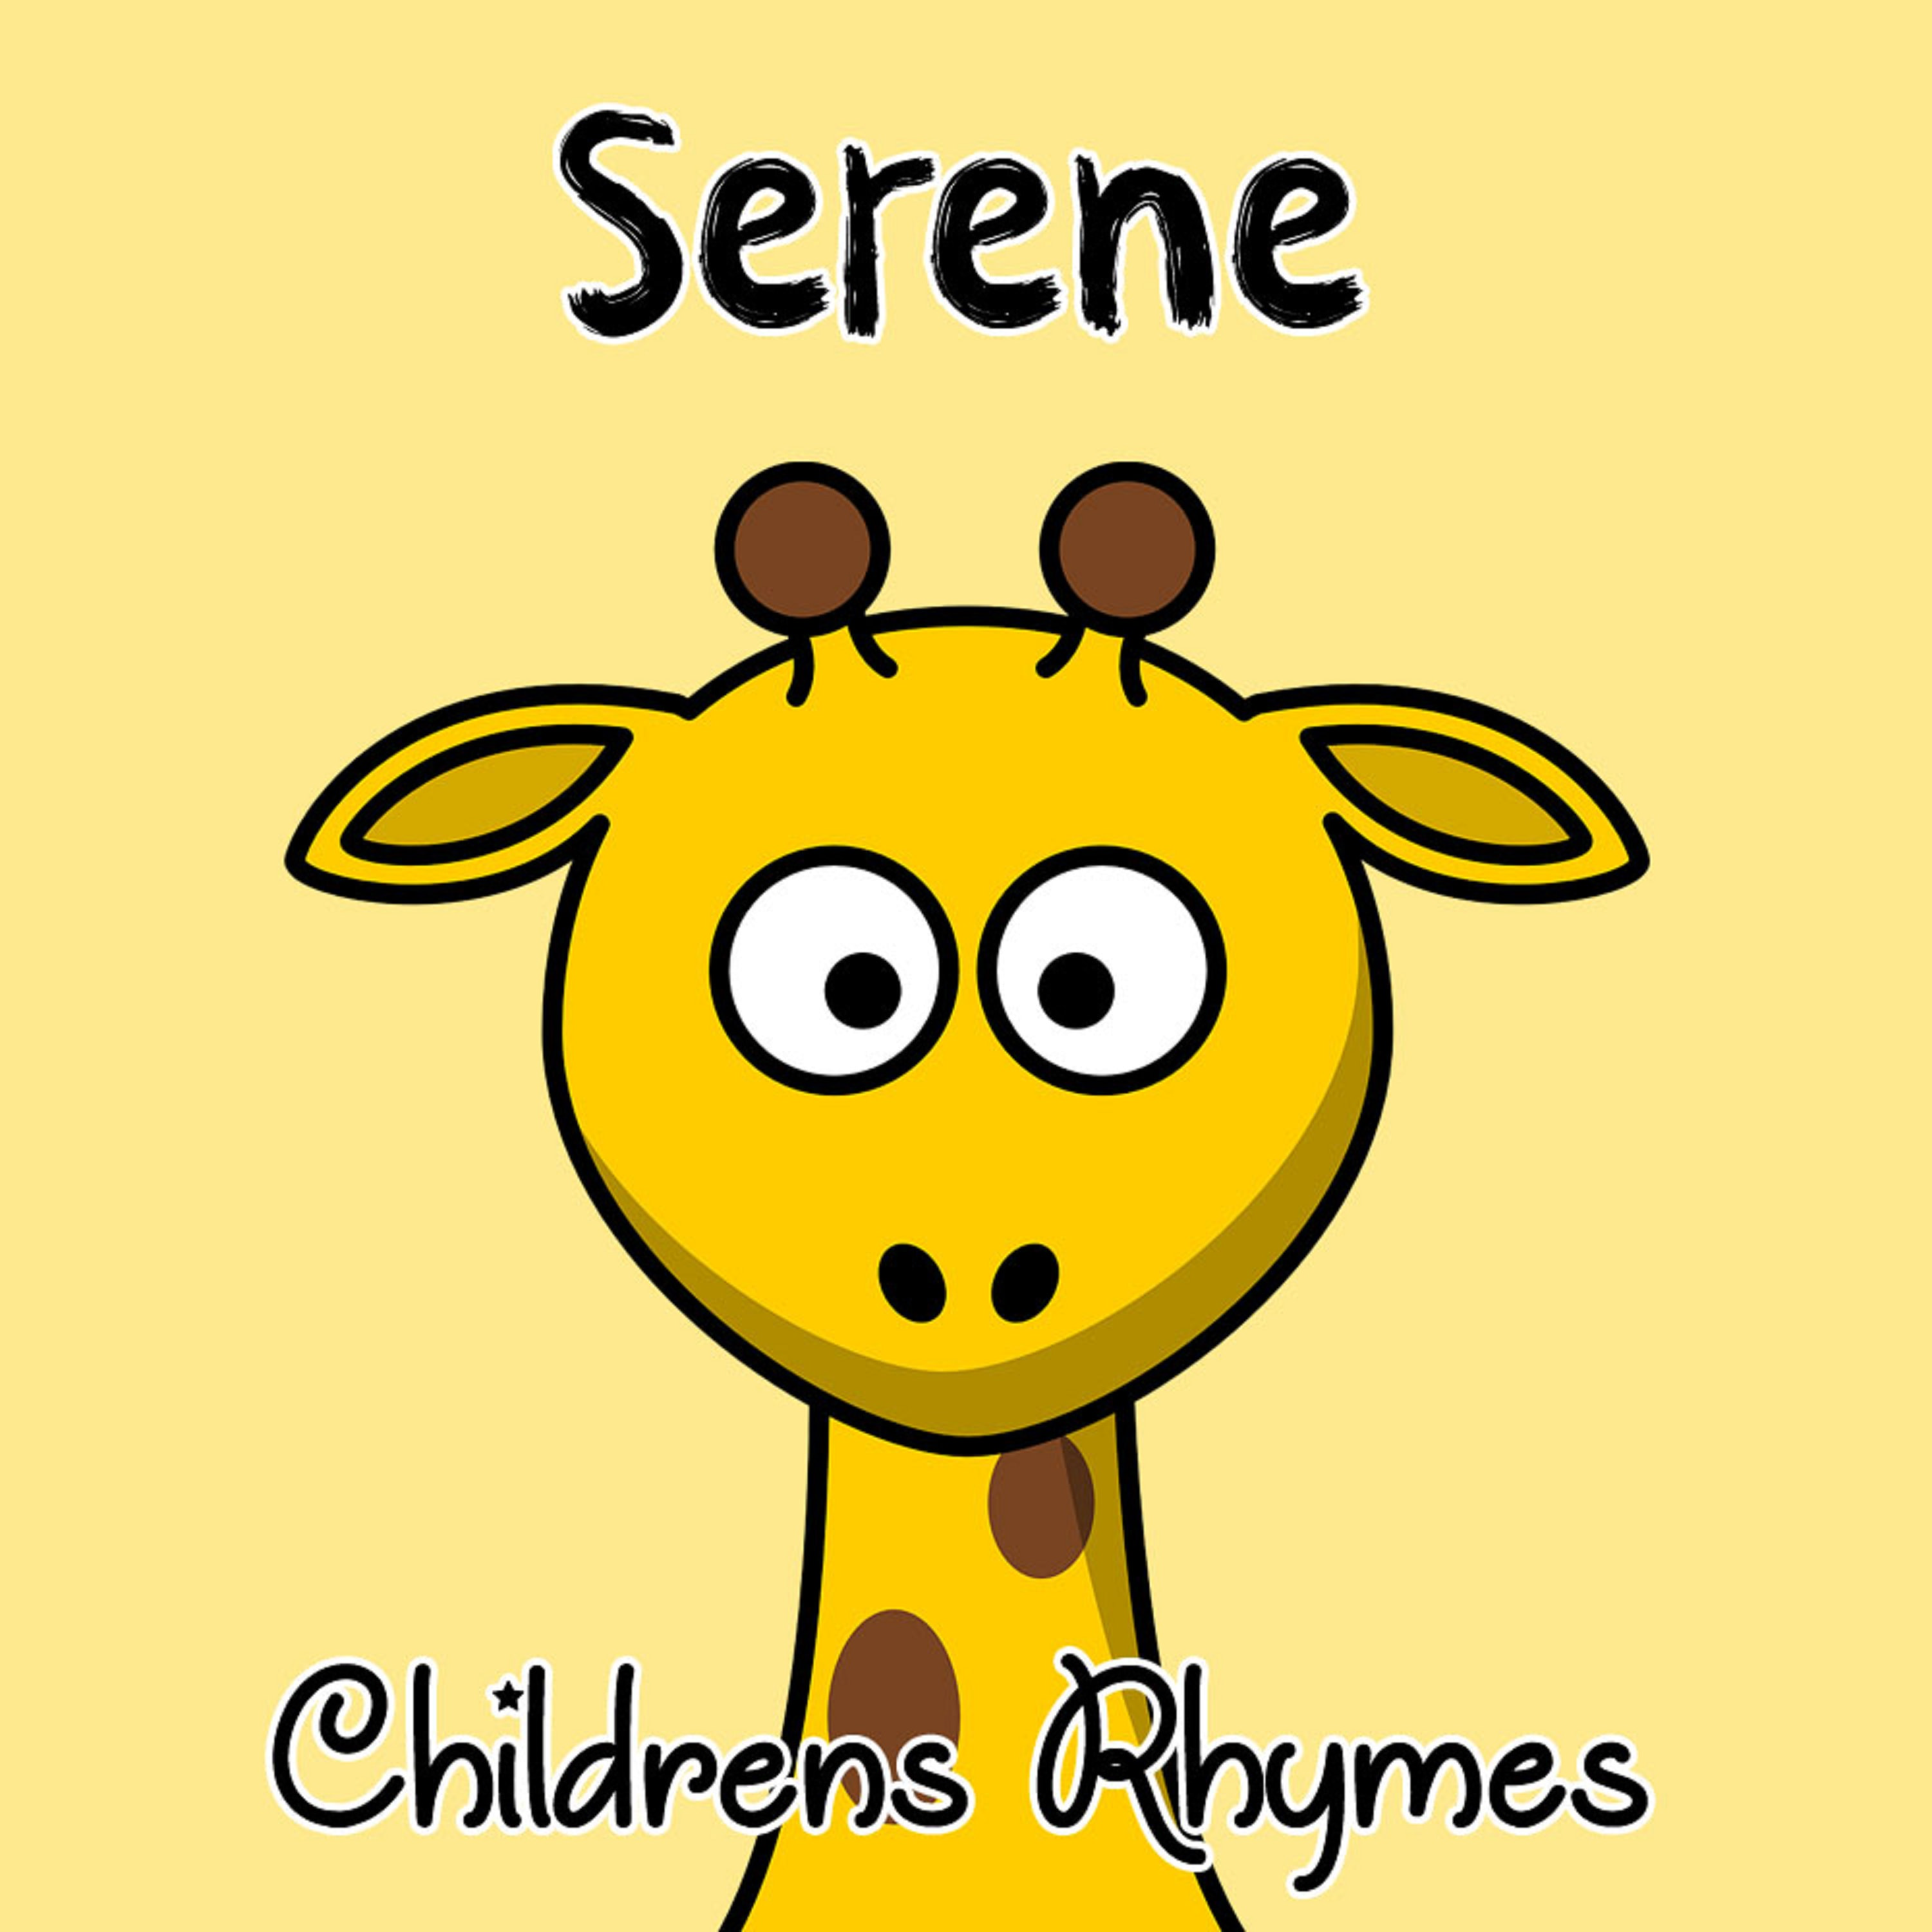 #16 Serene Childrens Rhymes